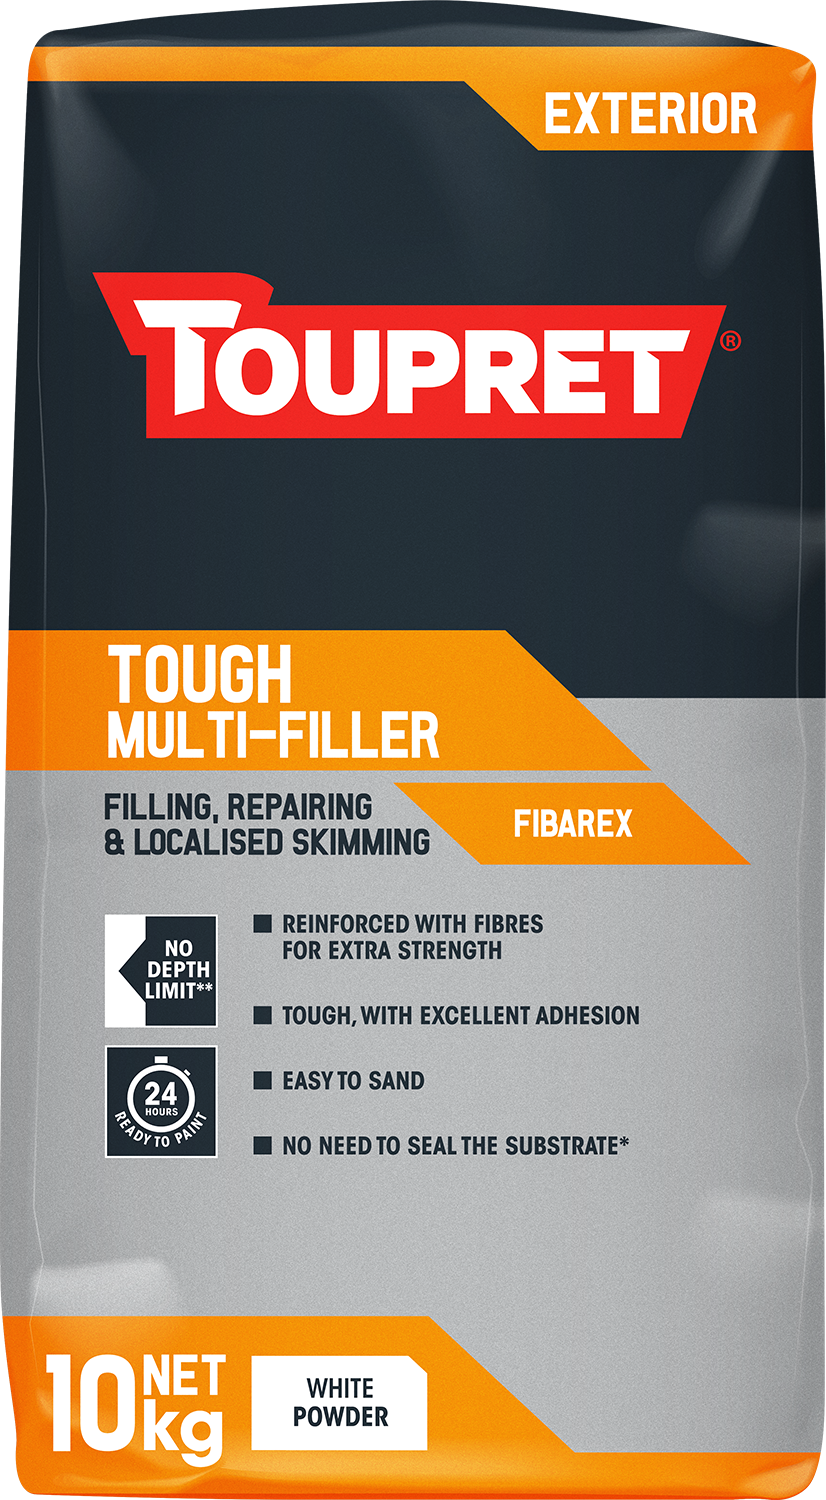 Toupret Tough Multi-Filler (Fibarex) 10kg